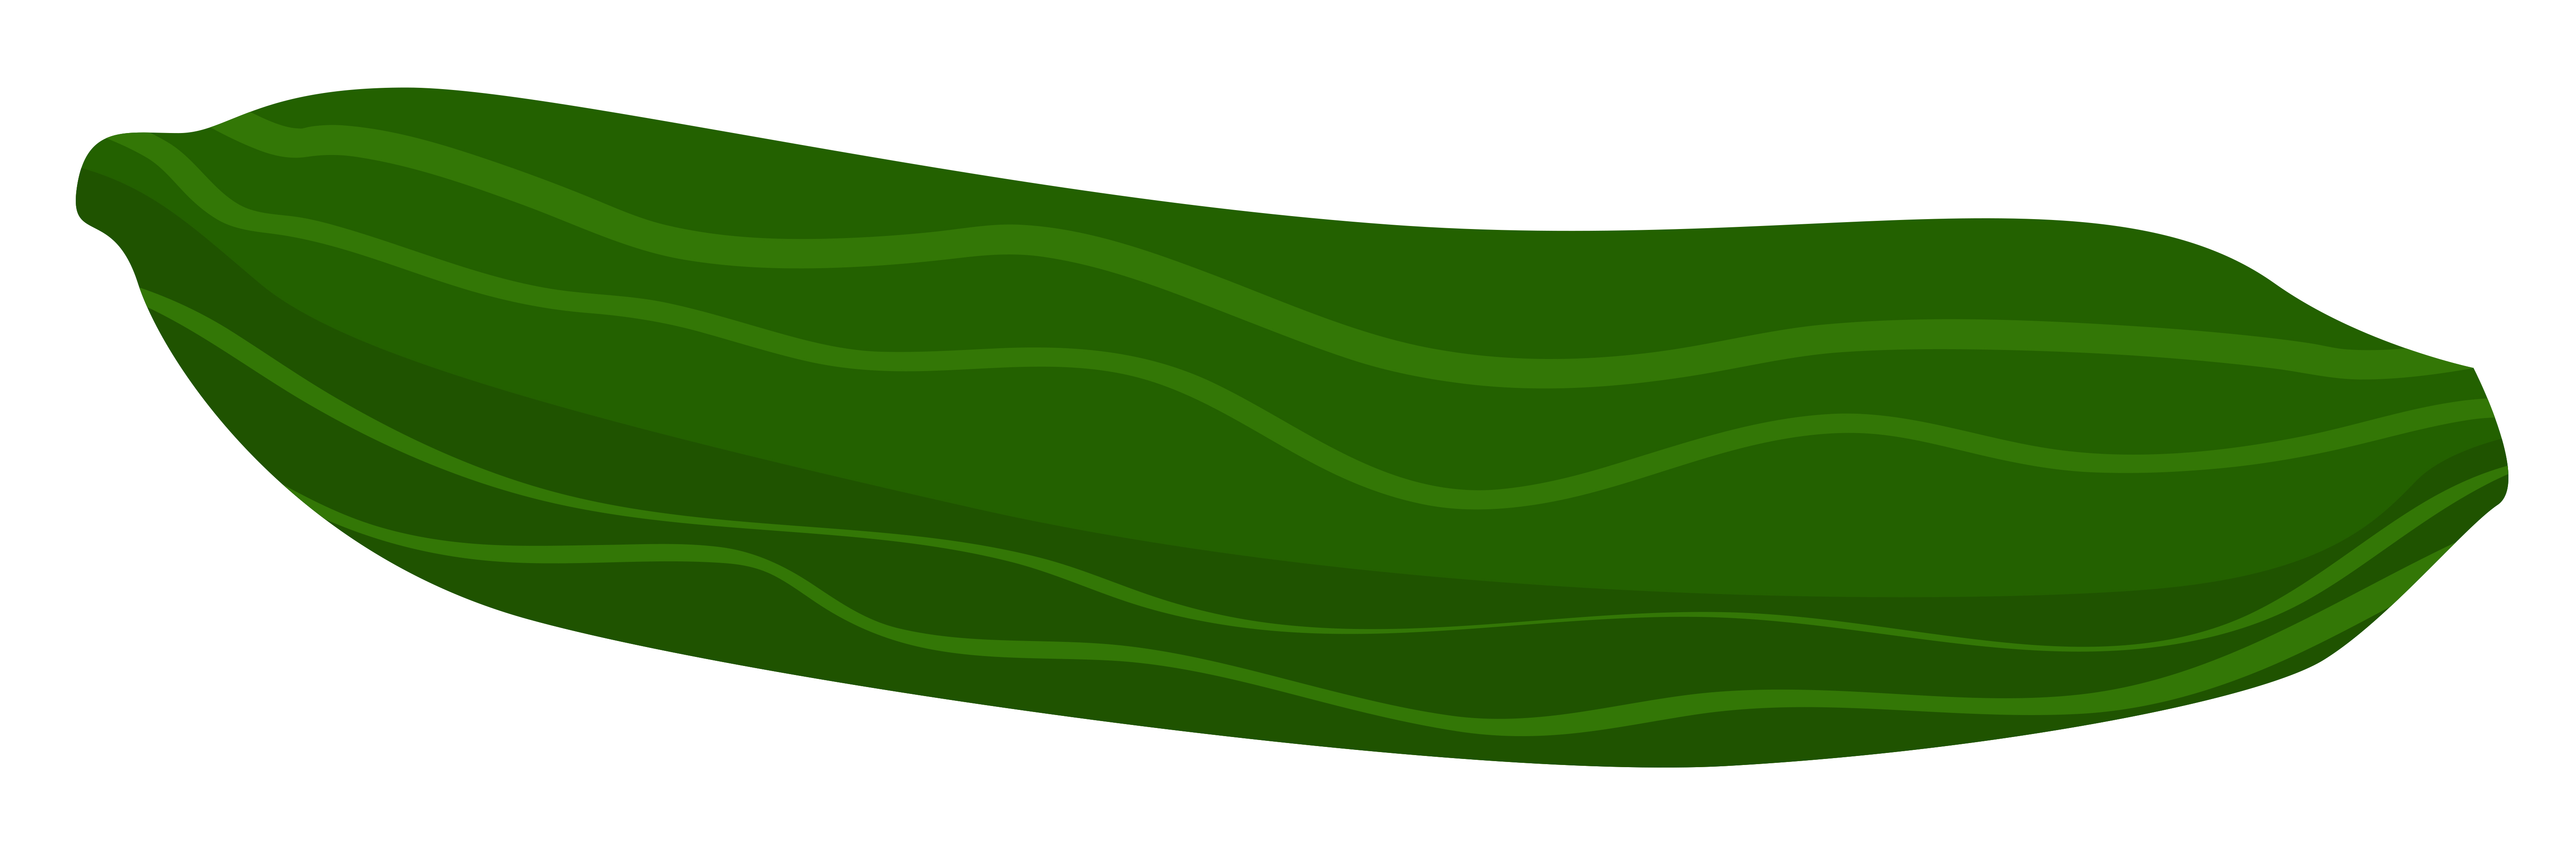 Cucumber clipart clipart 2